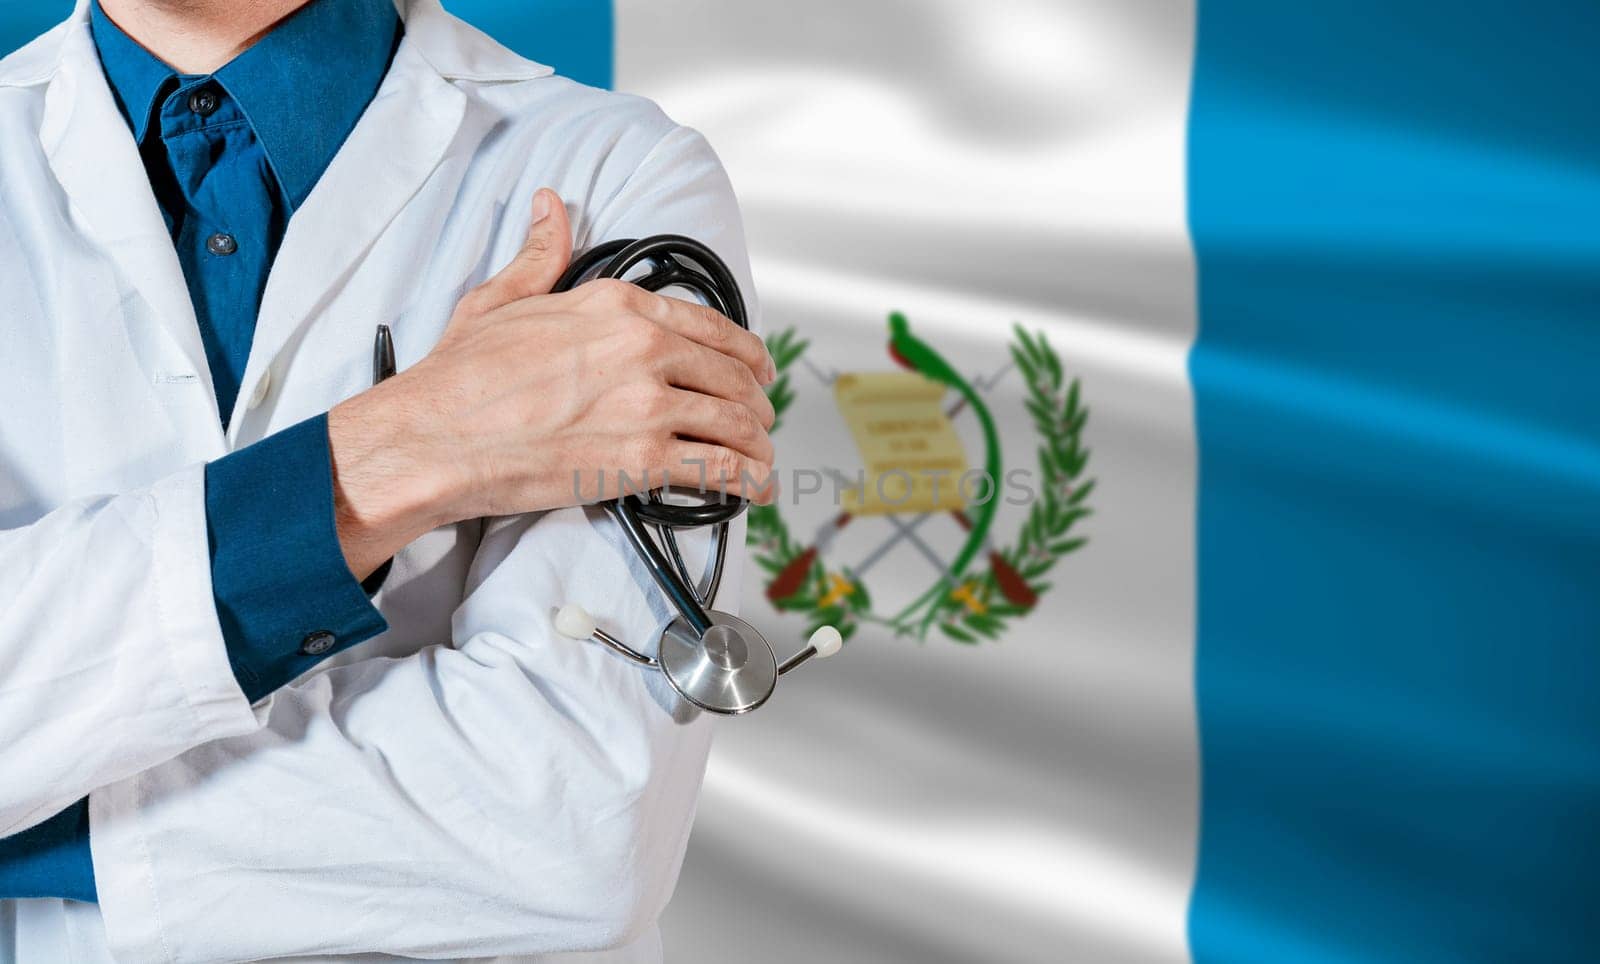 Doctor with stethoscope on guatemala flag. Health and care with the flag of Guatemala. Guatemala national health concept, Doctor arm with stethoscope on Guatemala flag